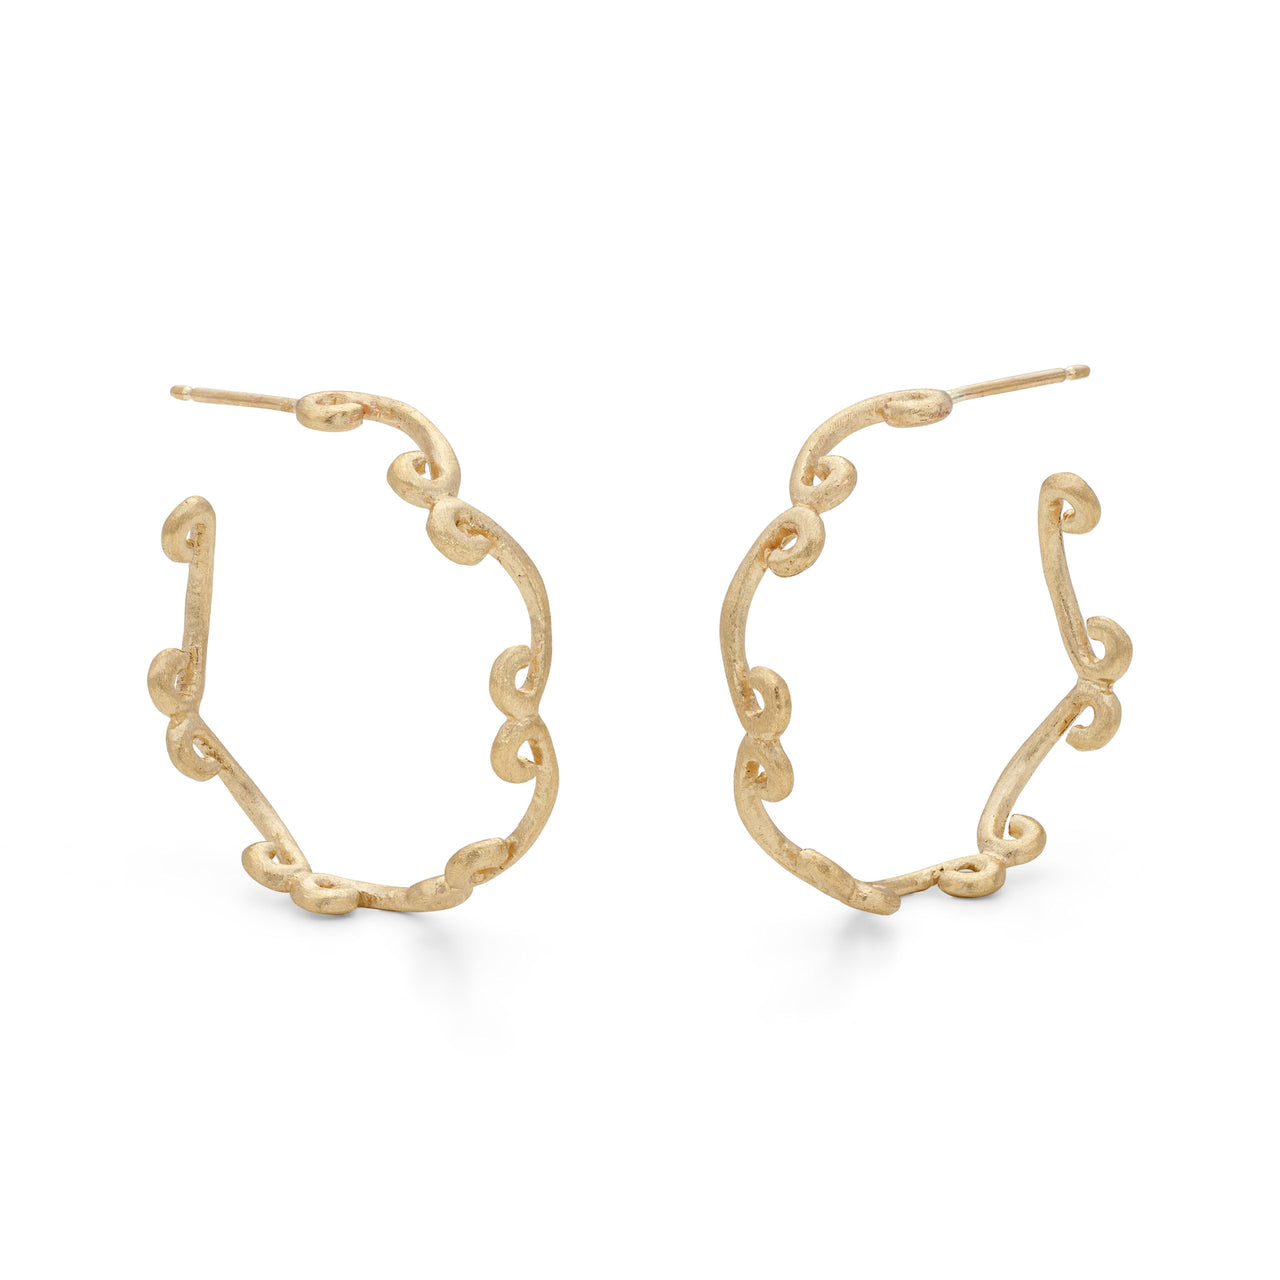 Decorative Gold Hoop Earrings